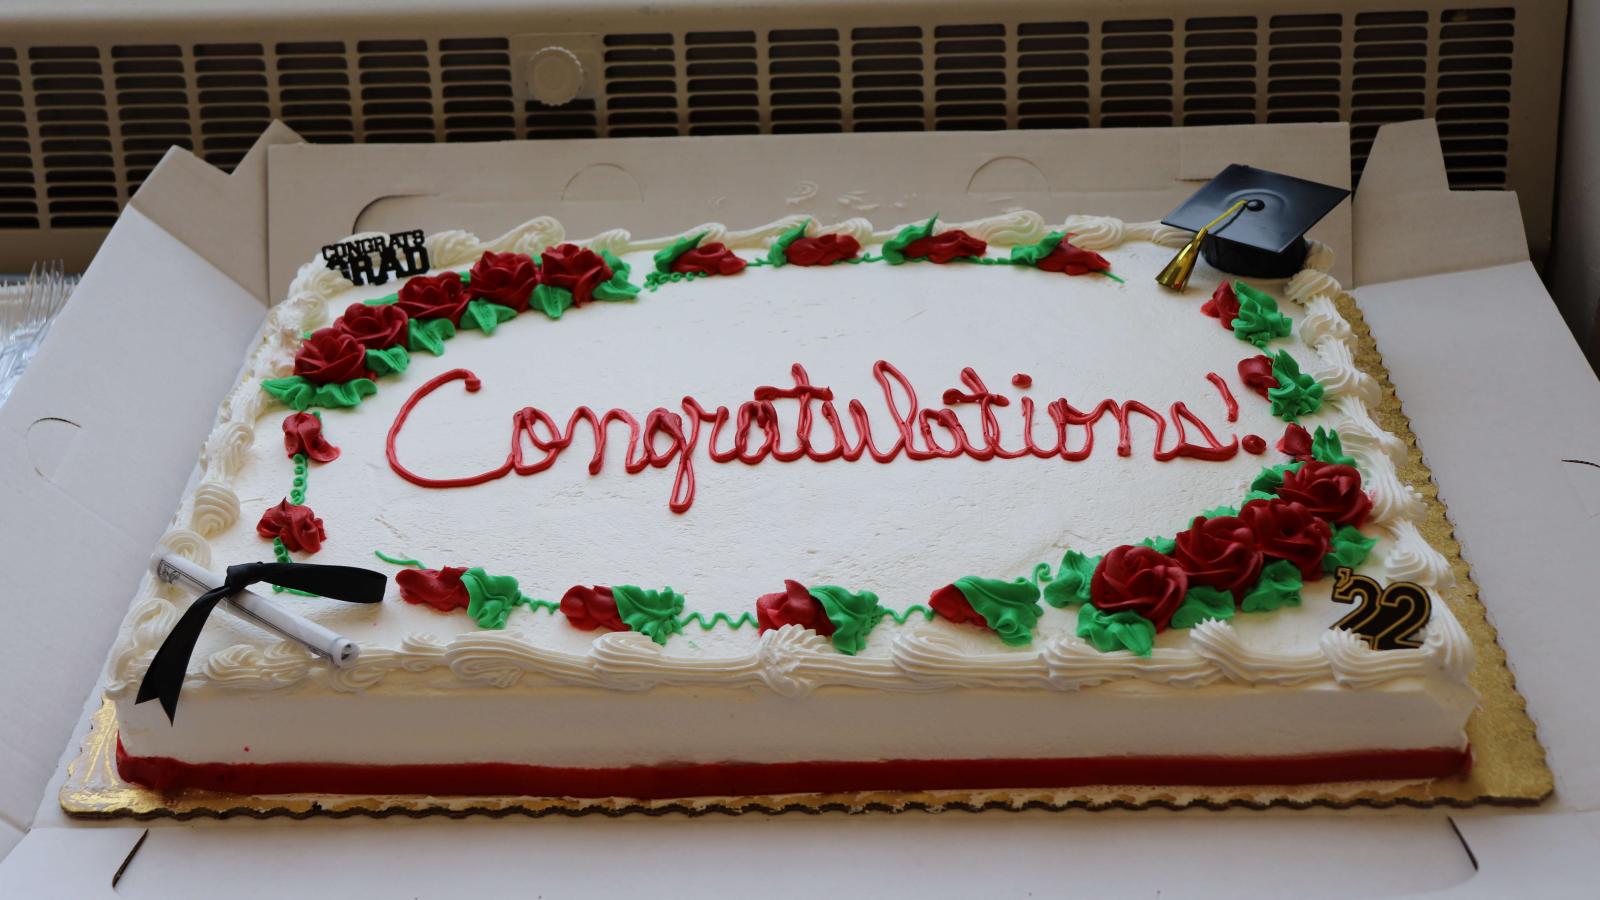 Cake celebrating our graduates